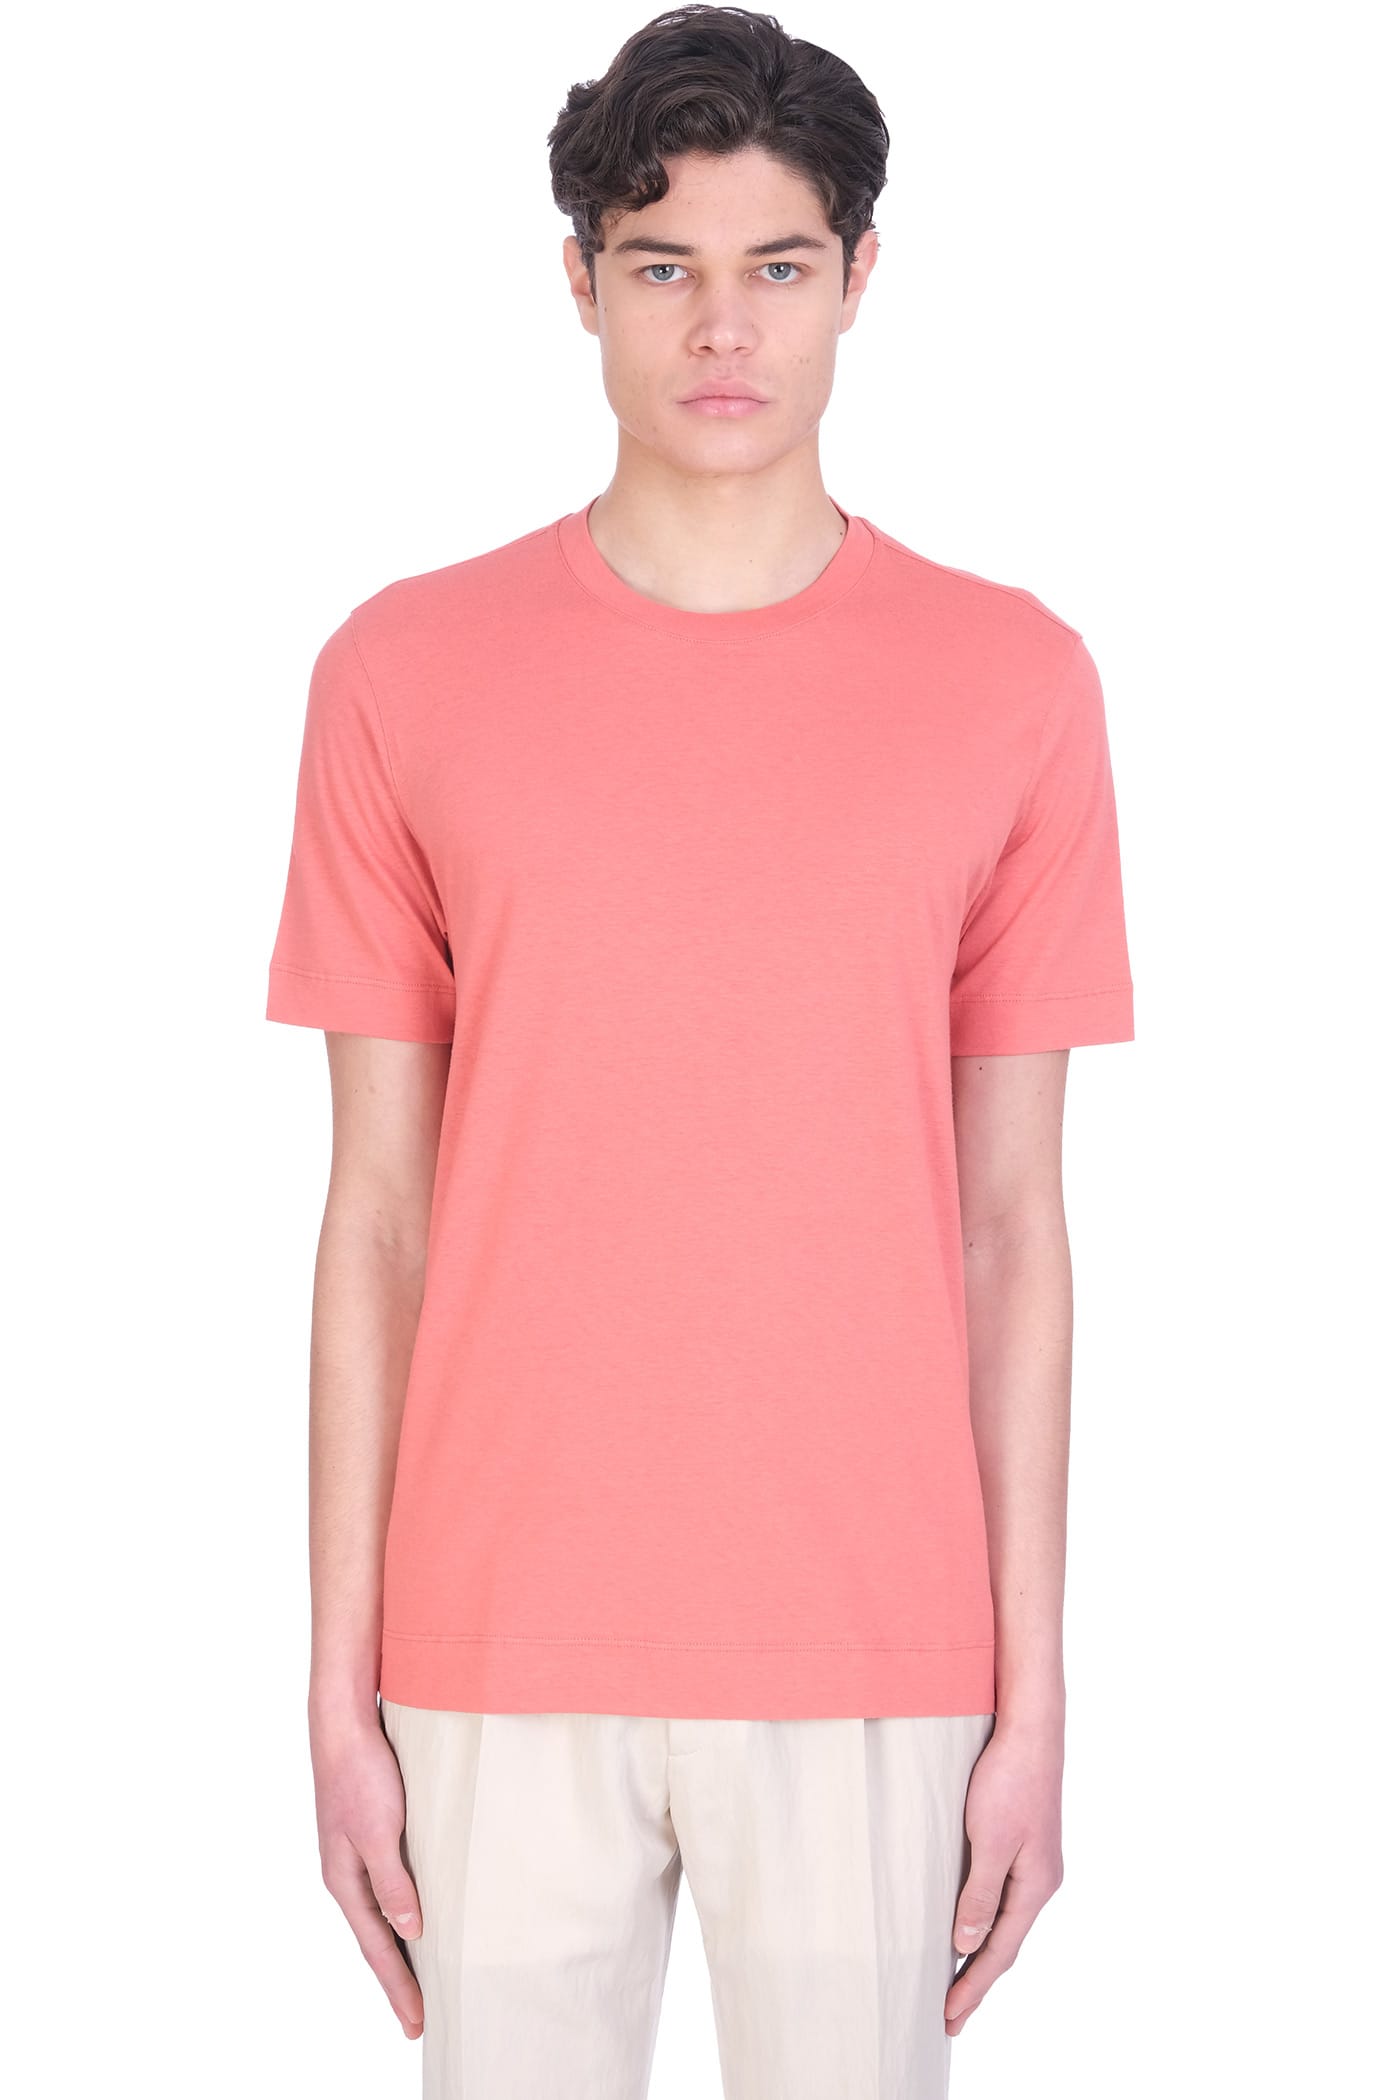 Ermenegildo Zegna T-shirt In Red Cotton And Linen